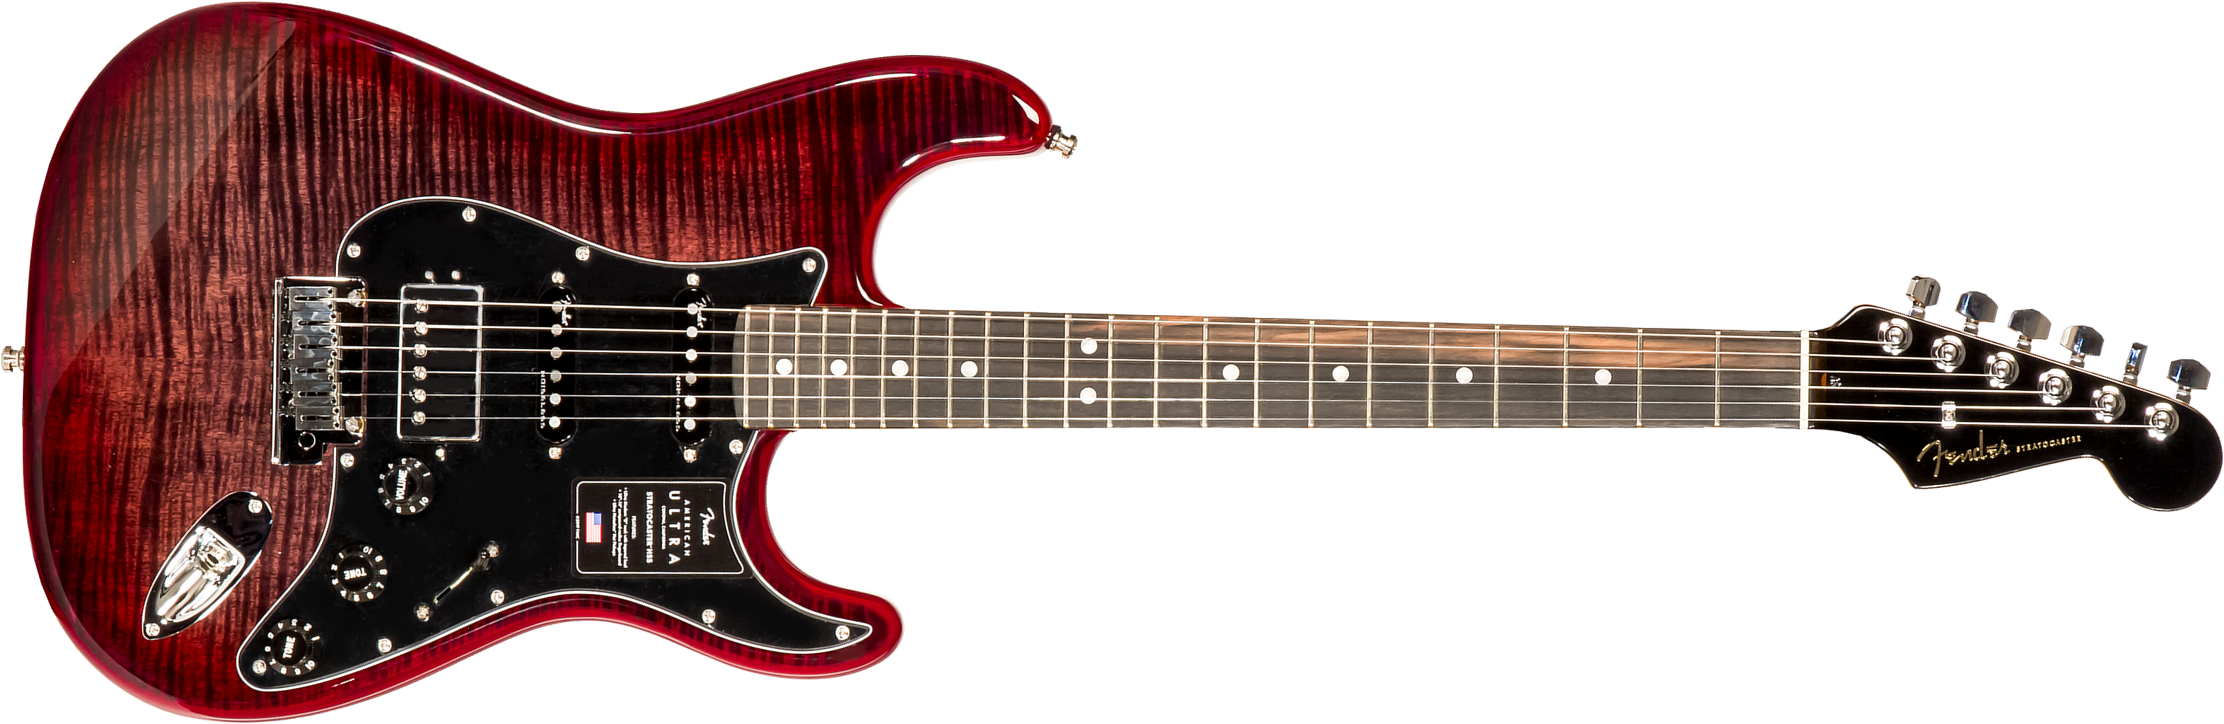 Fender Strat American Ultra Ltd Usa Hss Trem Eb - Umbra - Guitare Électrique Forme Str - Main picture